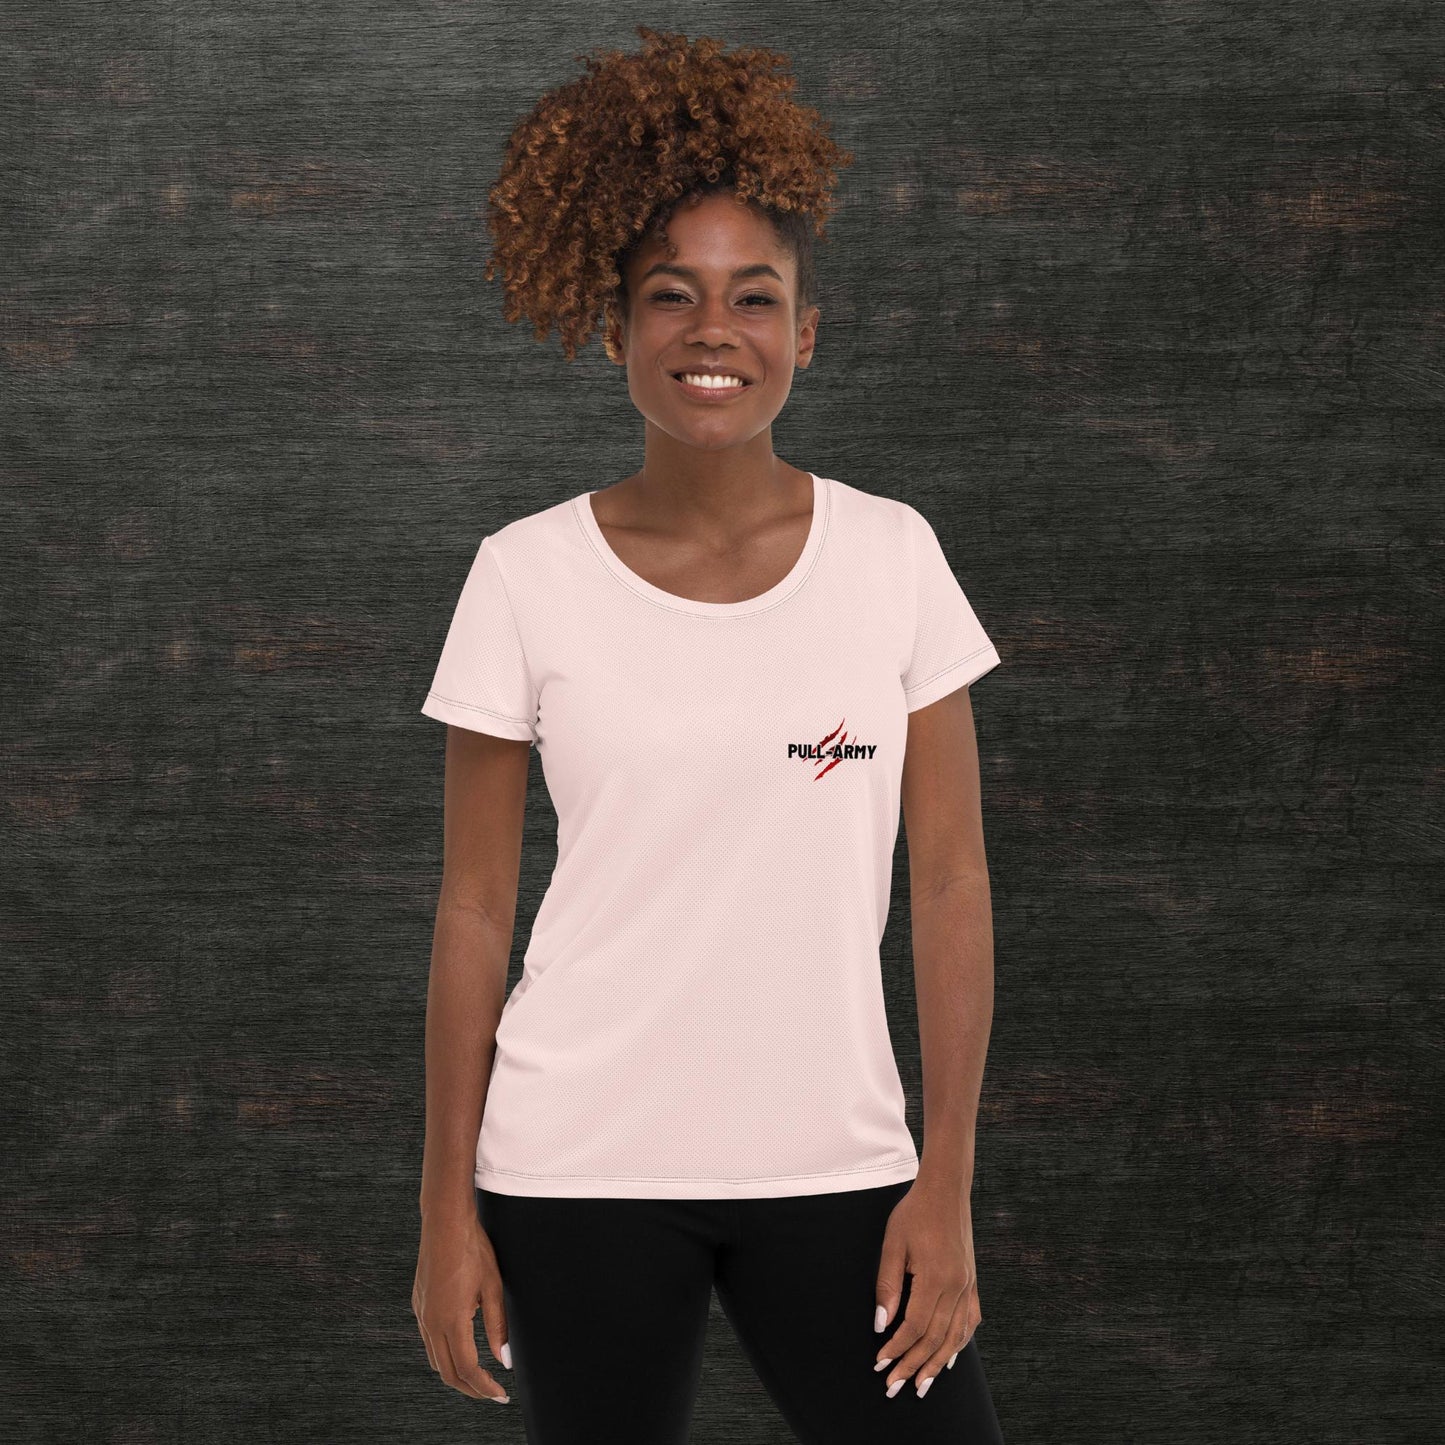 Pull-Army Camiseta deportiva mujer